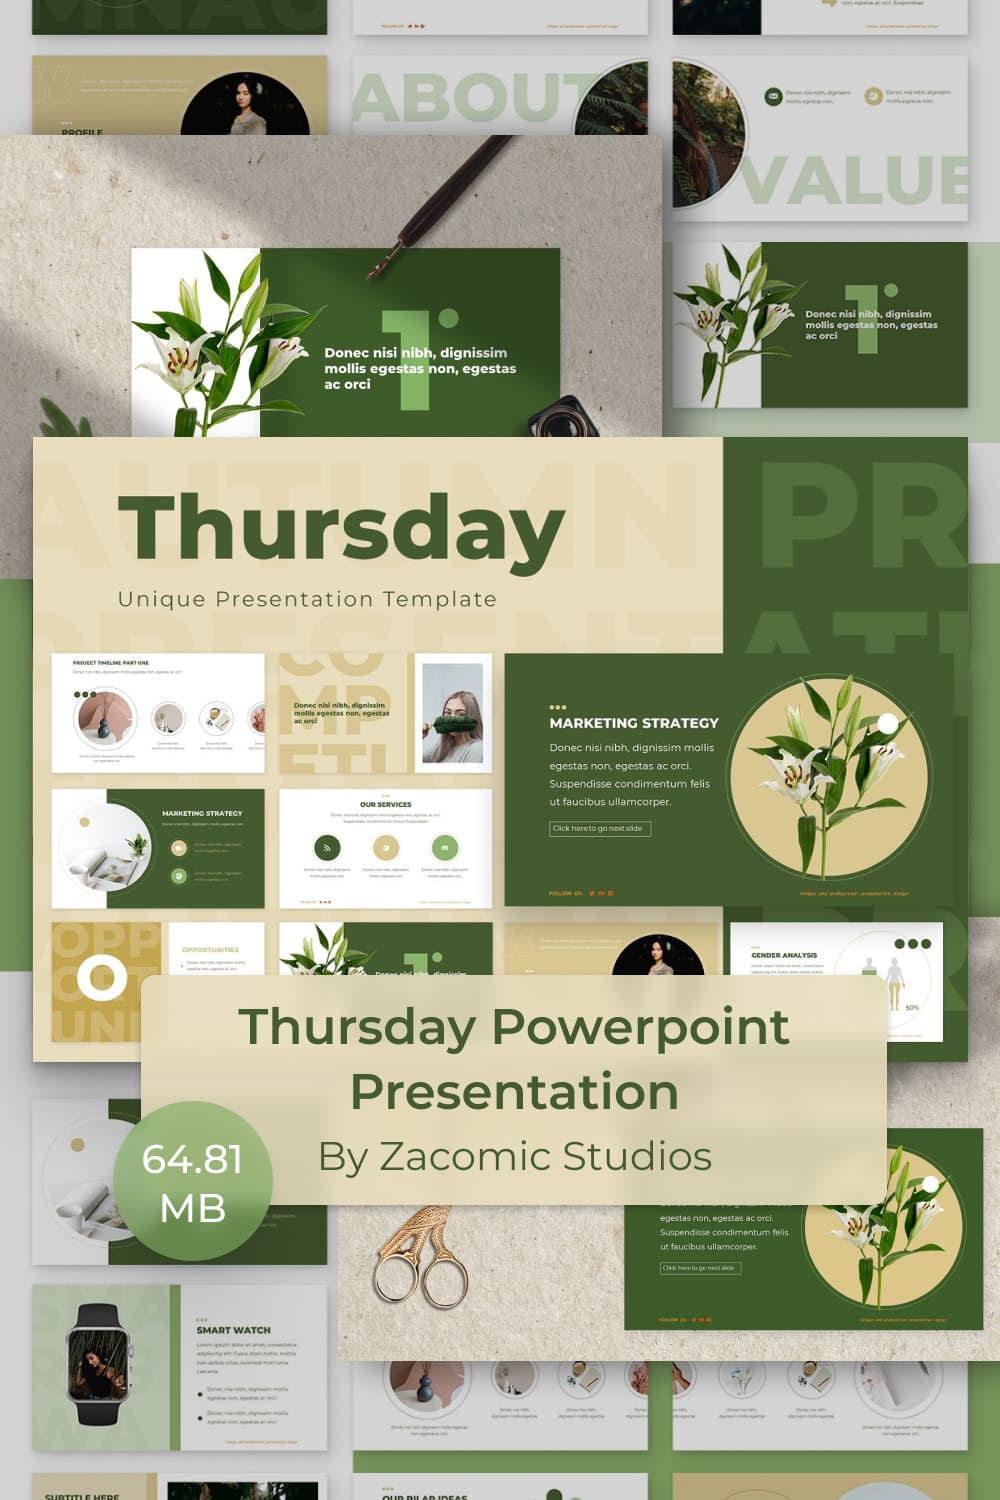 Thursday Powerpoint Presentation Template by MasterBundles Pinterest Collage Image.